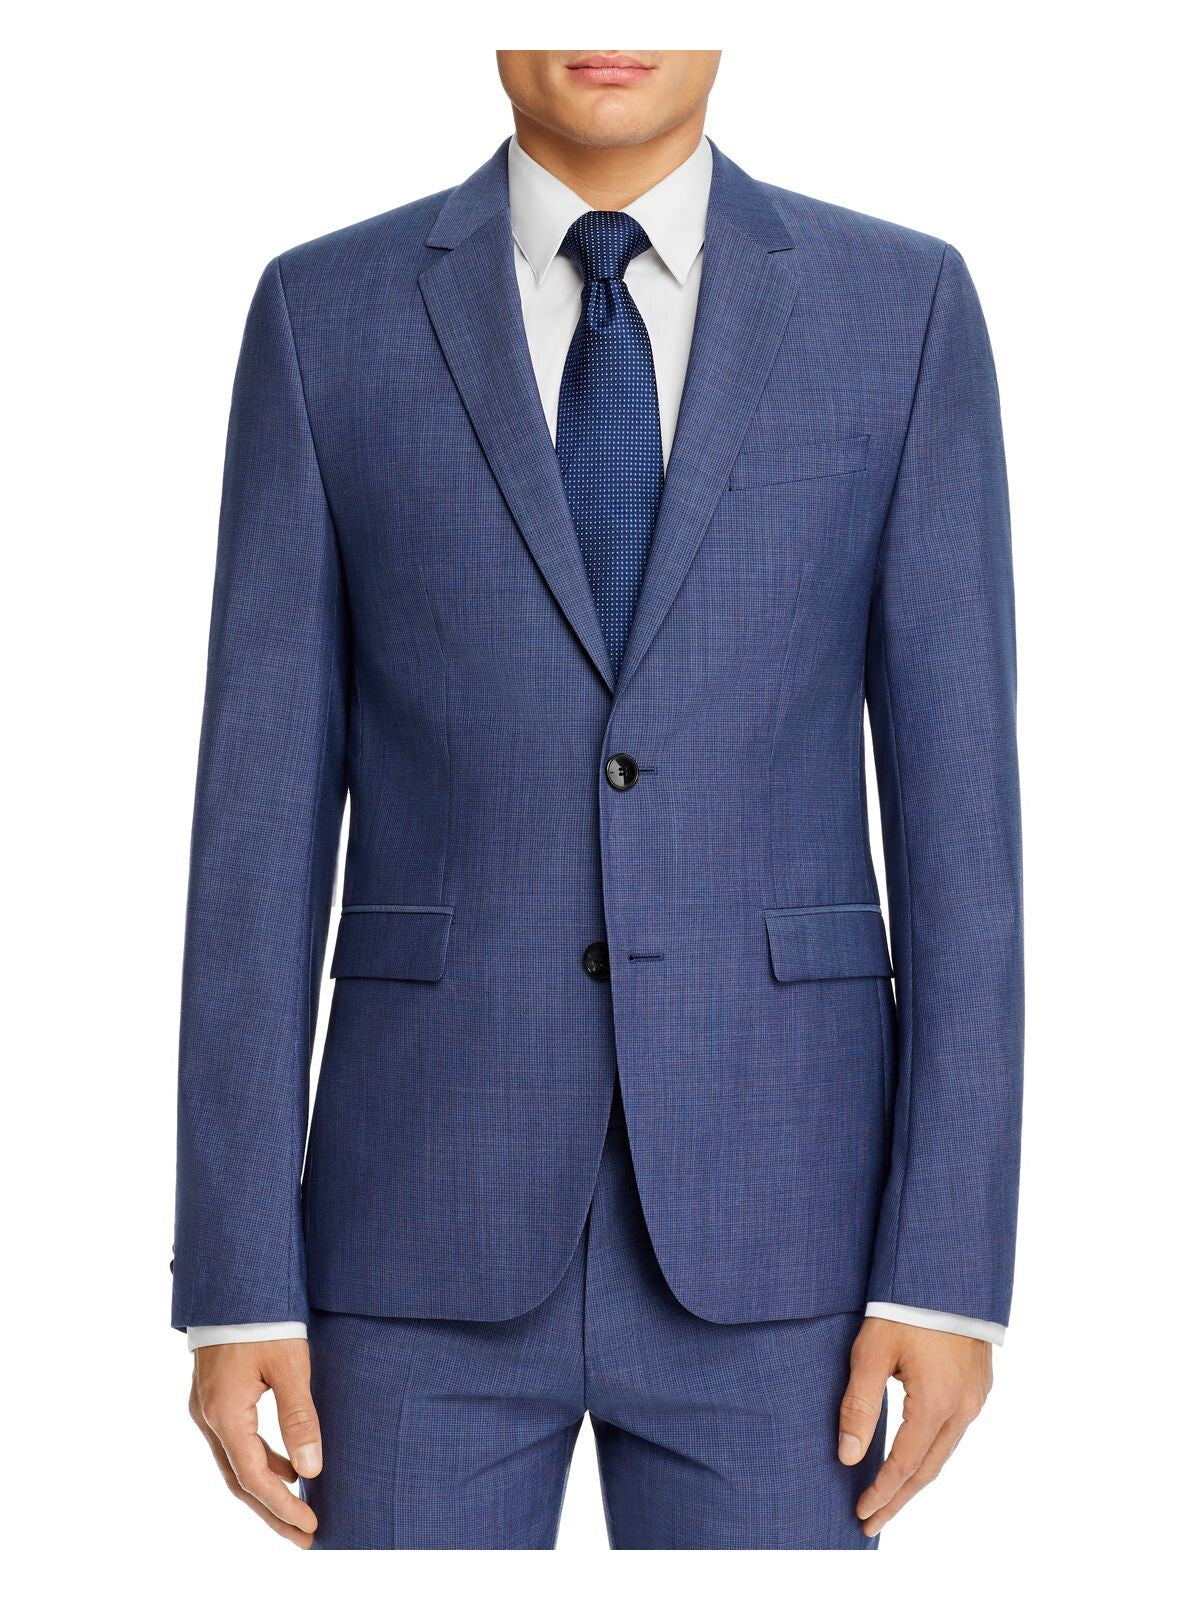 HUGO BOSS Mens Blue Single Breasted, Wool Blend Suit Jacket 40 Short